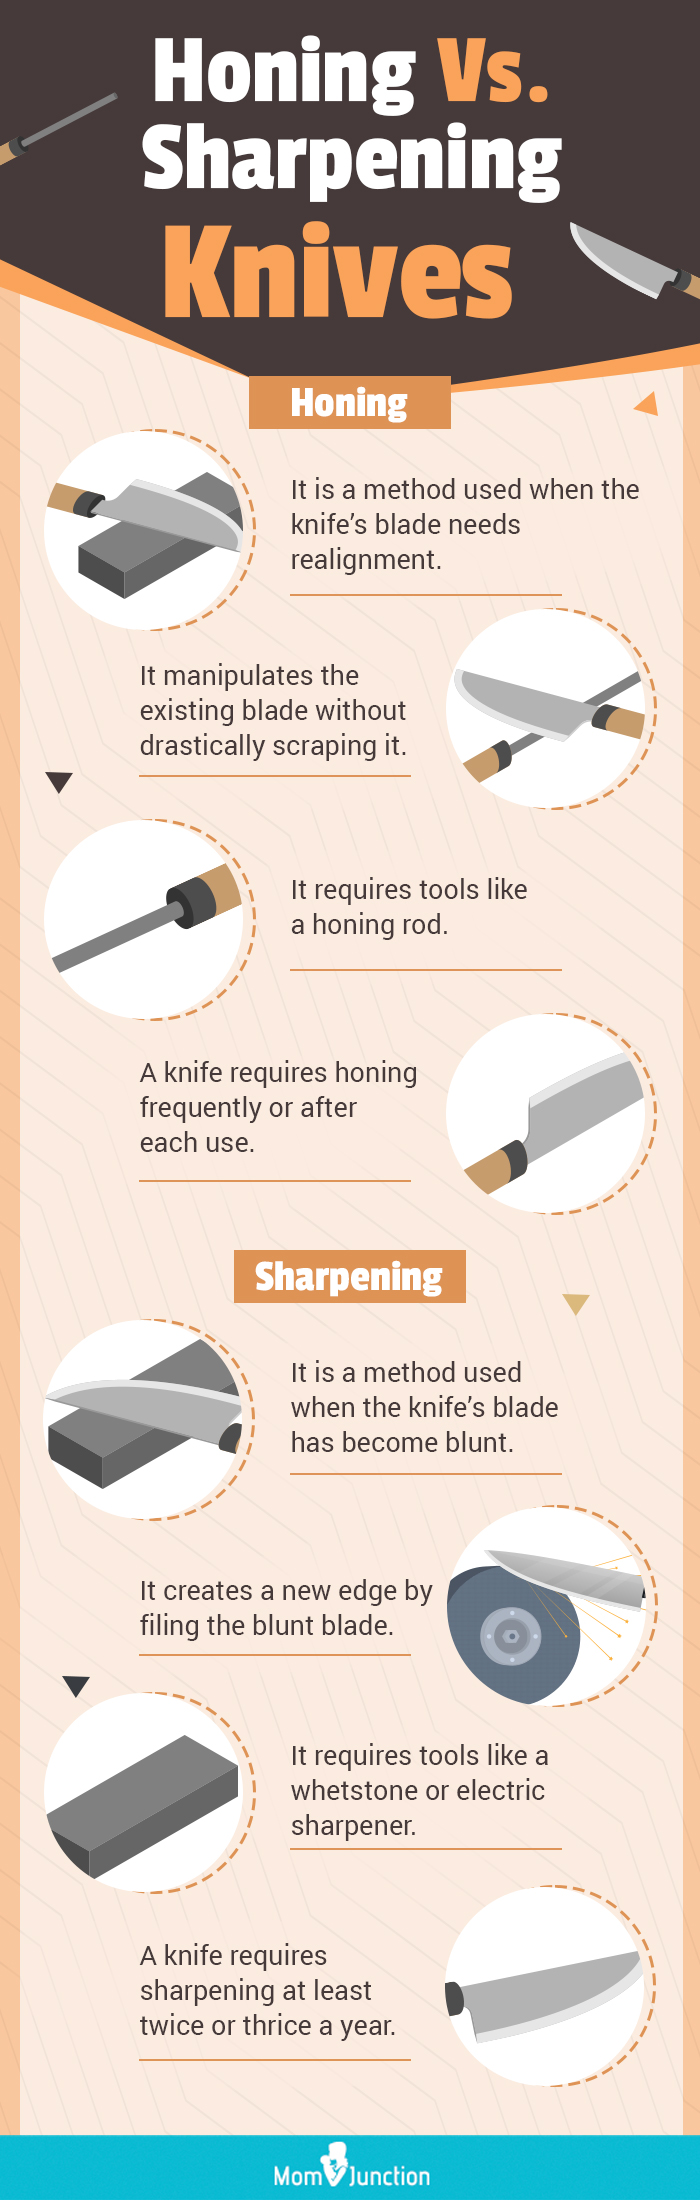 Honing Vs. Sharpening Knives (infographic)